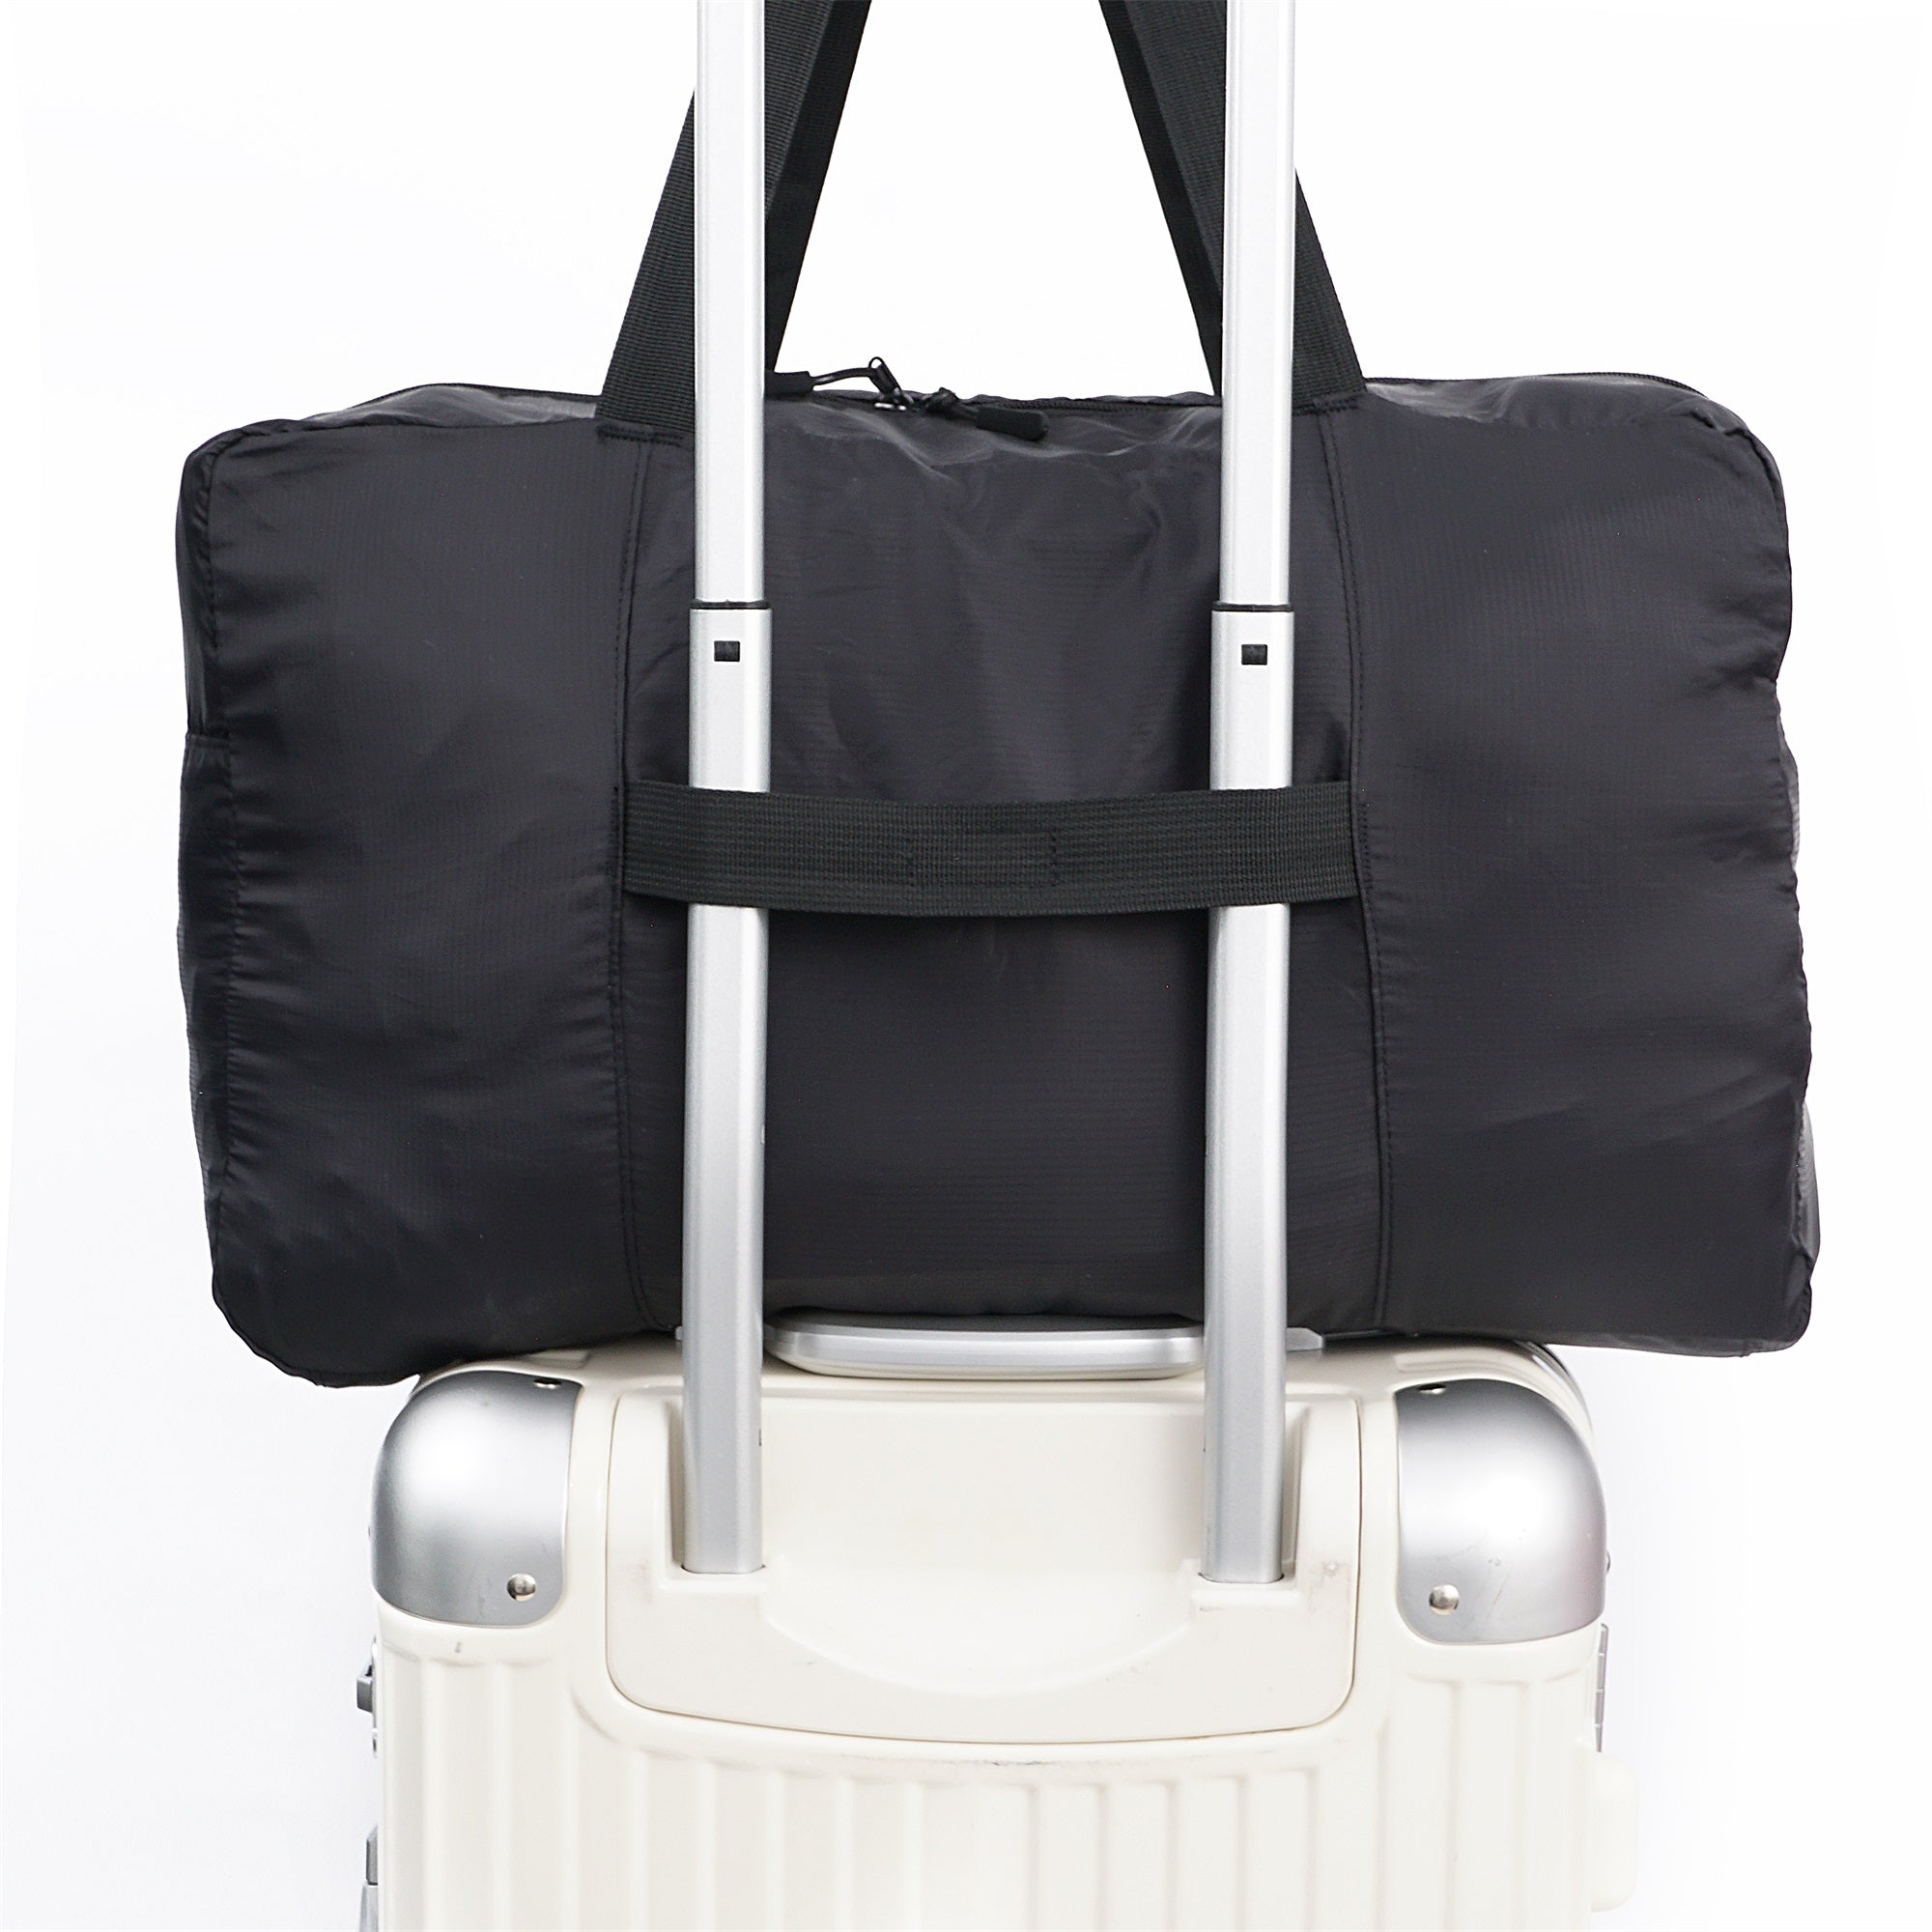 Black Foldable travel bag